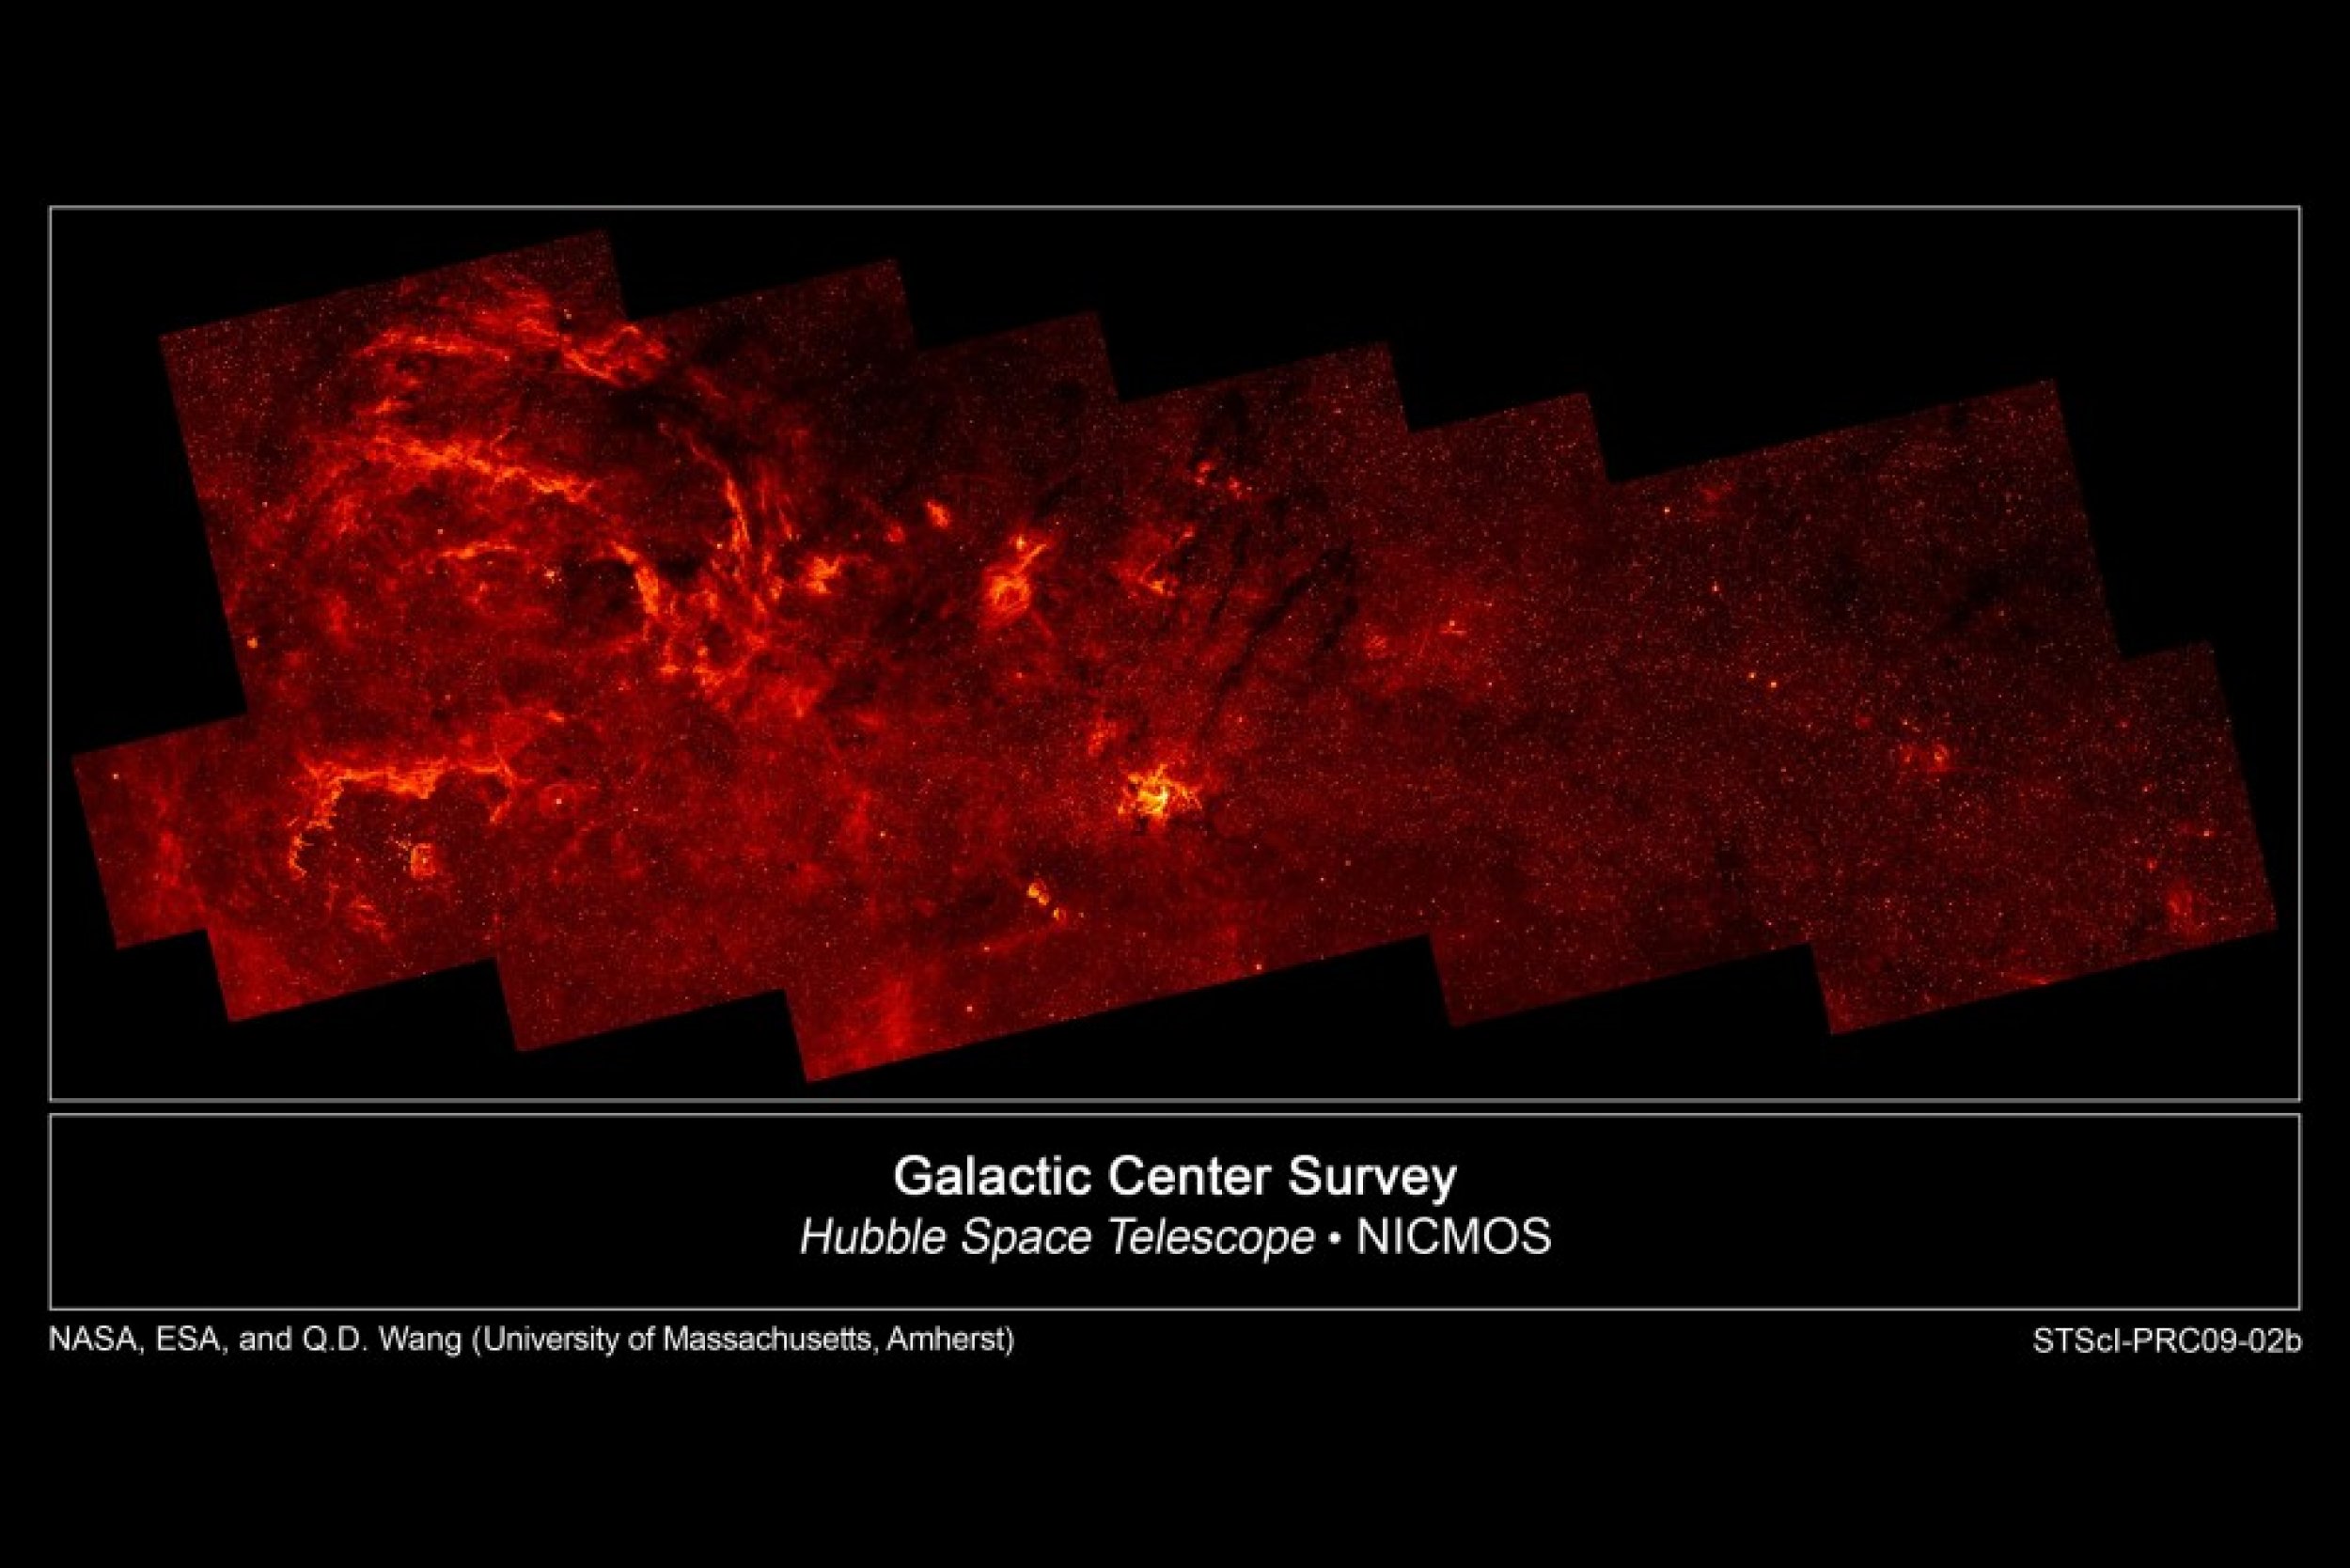 Galactic Center